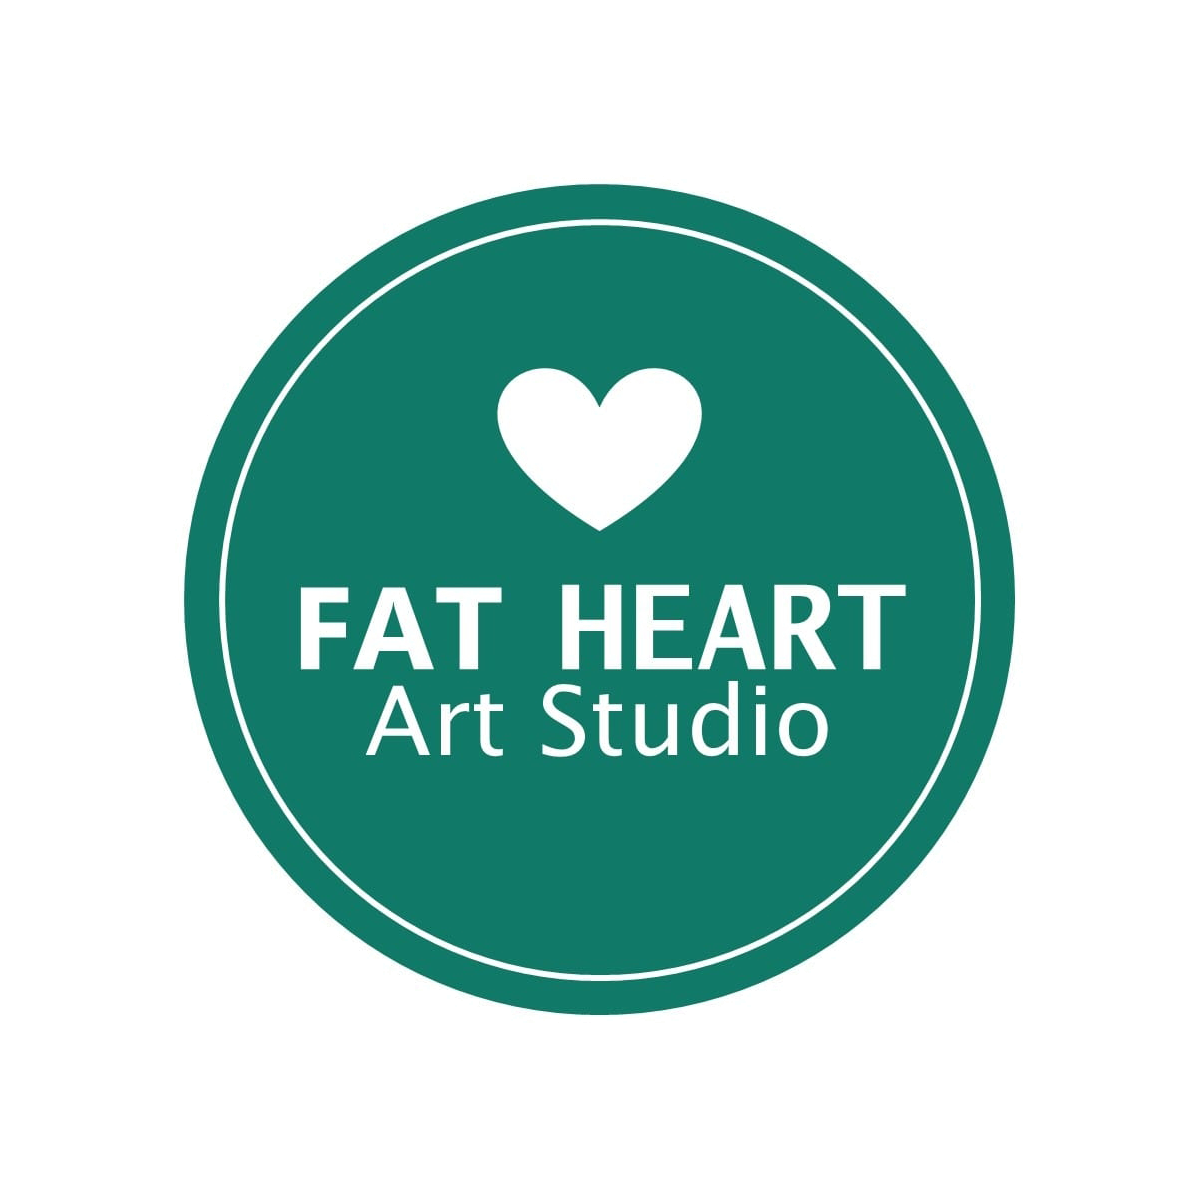 A green circular logo features a white heart, and the text Fat Heart Art Studio